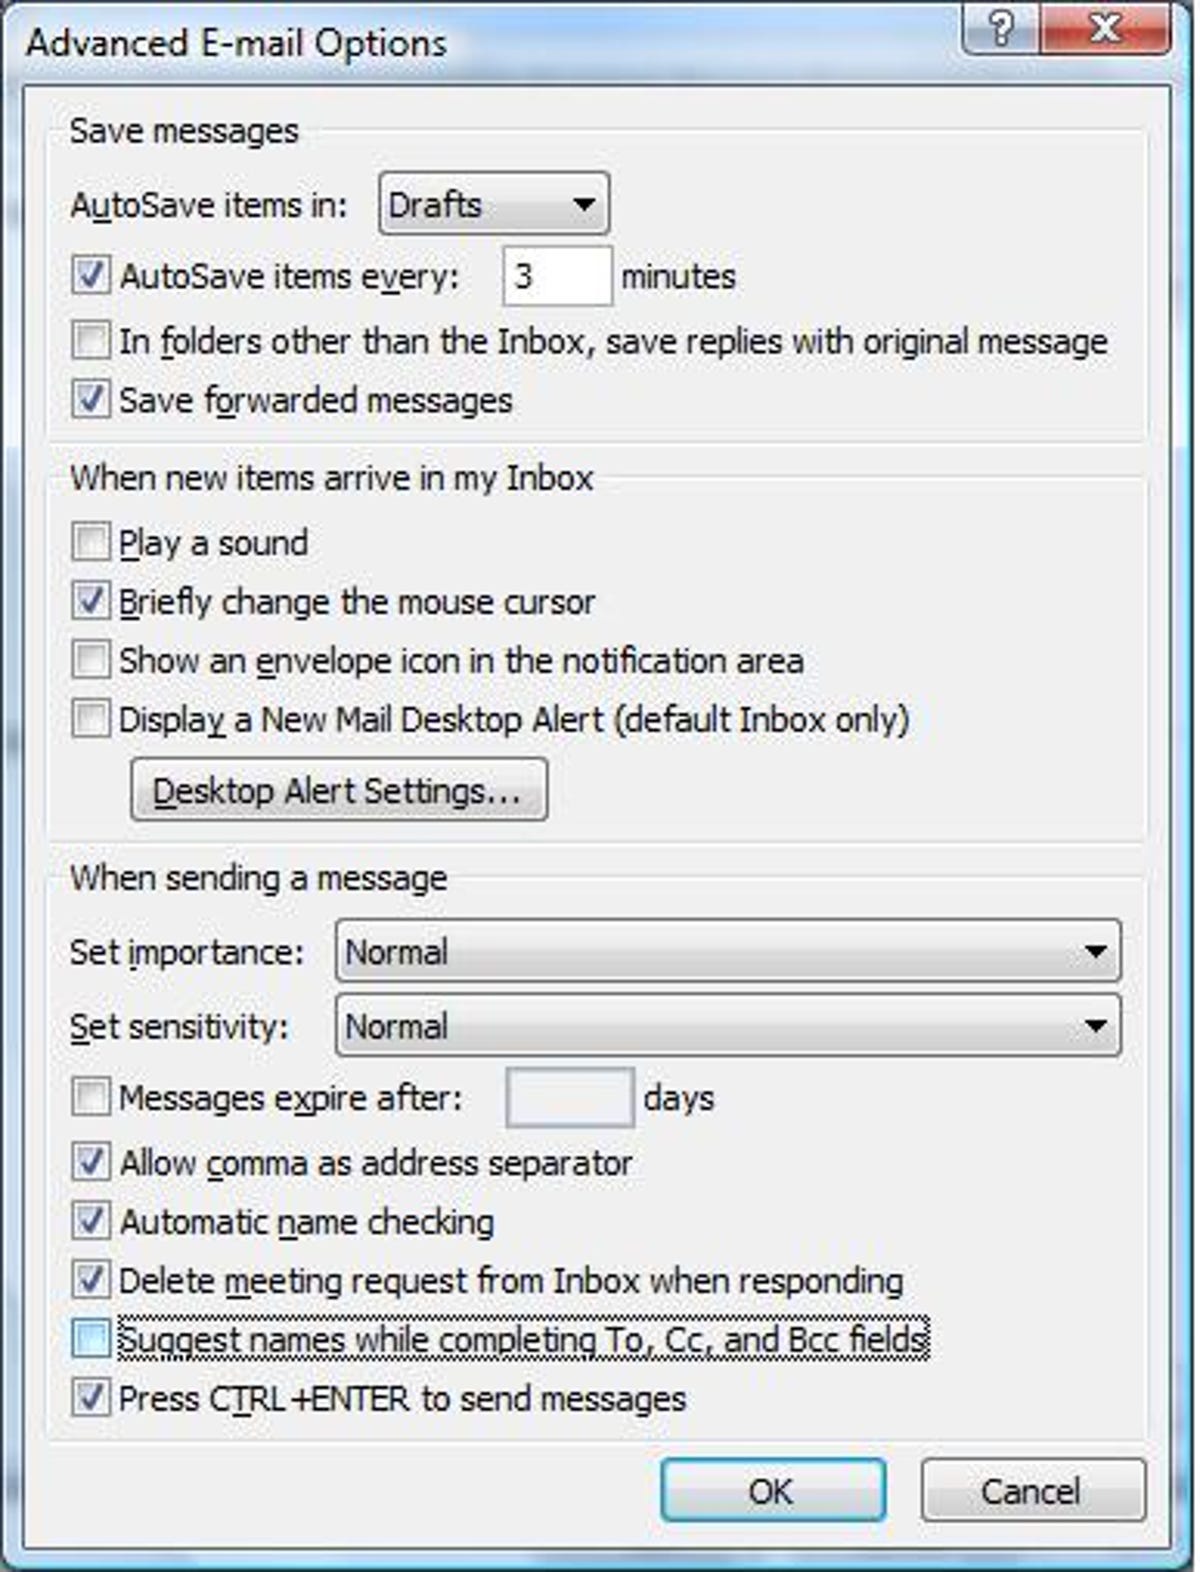 Microsoft Outlook 2007 Advanced E-mail Options dialog box